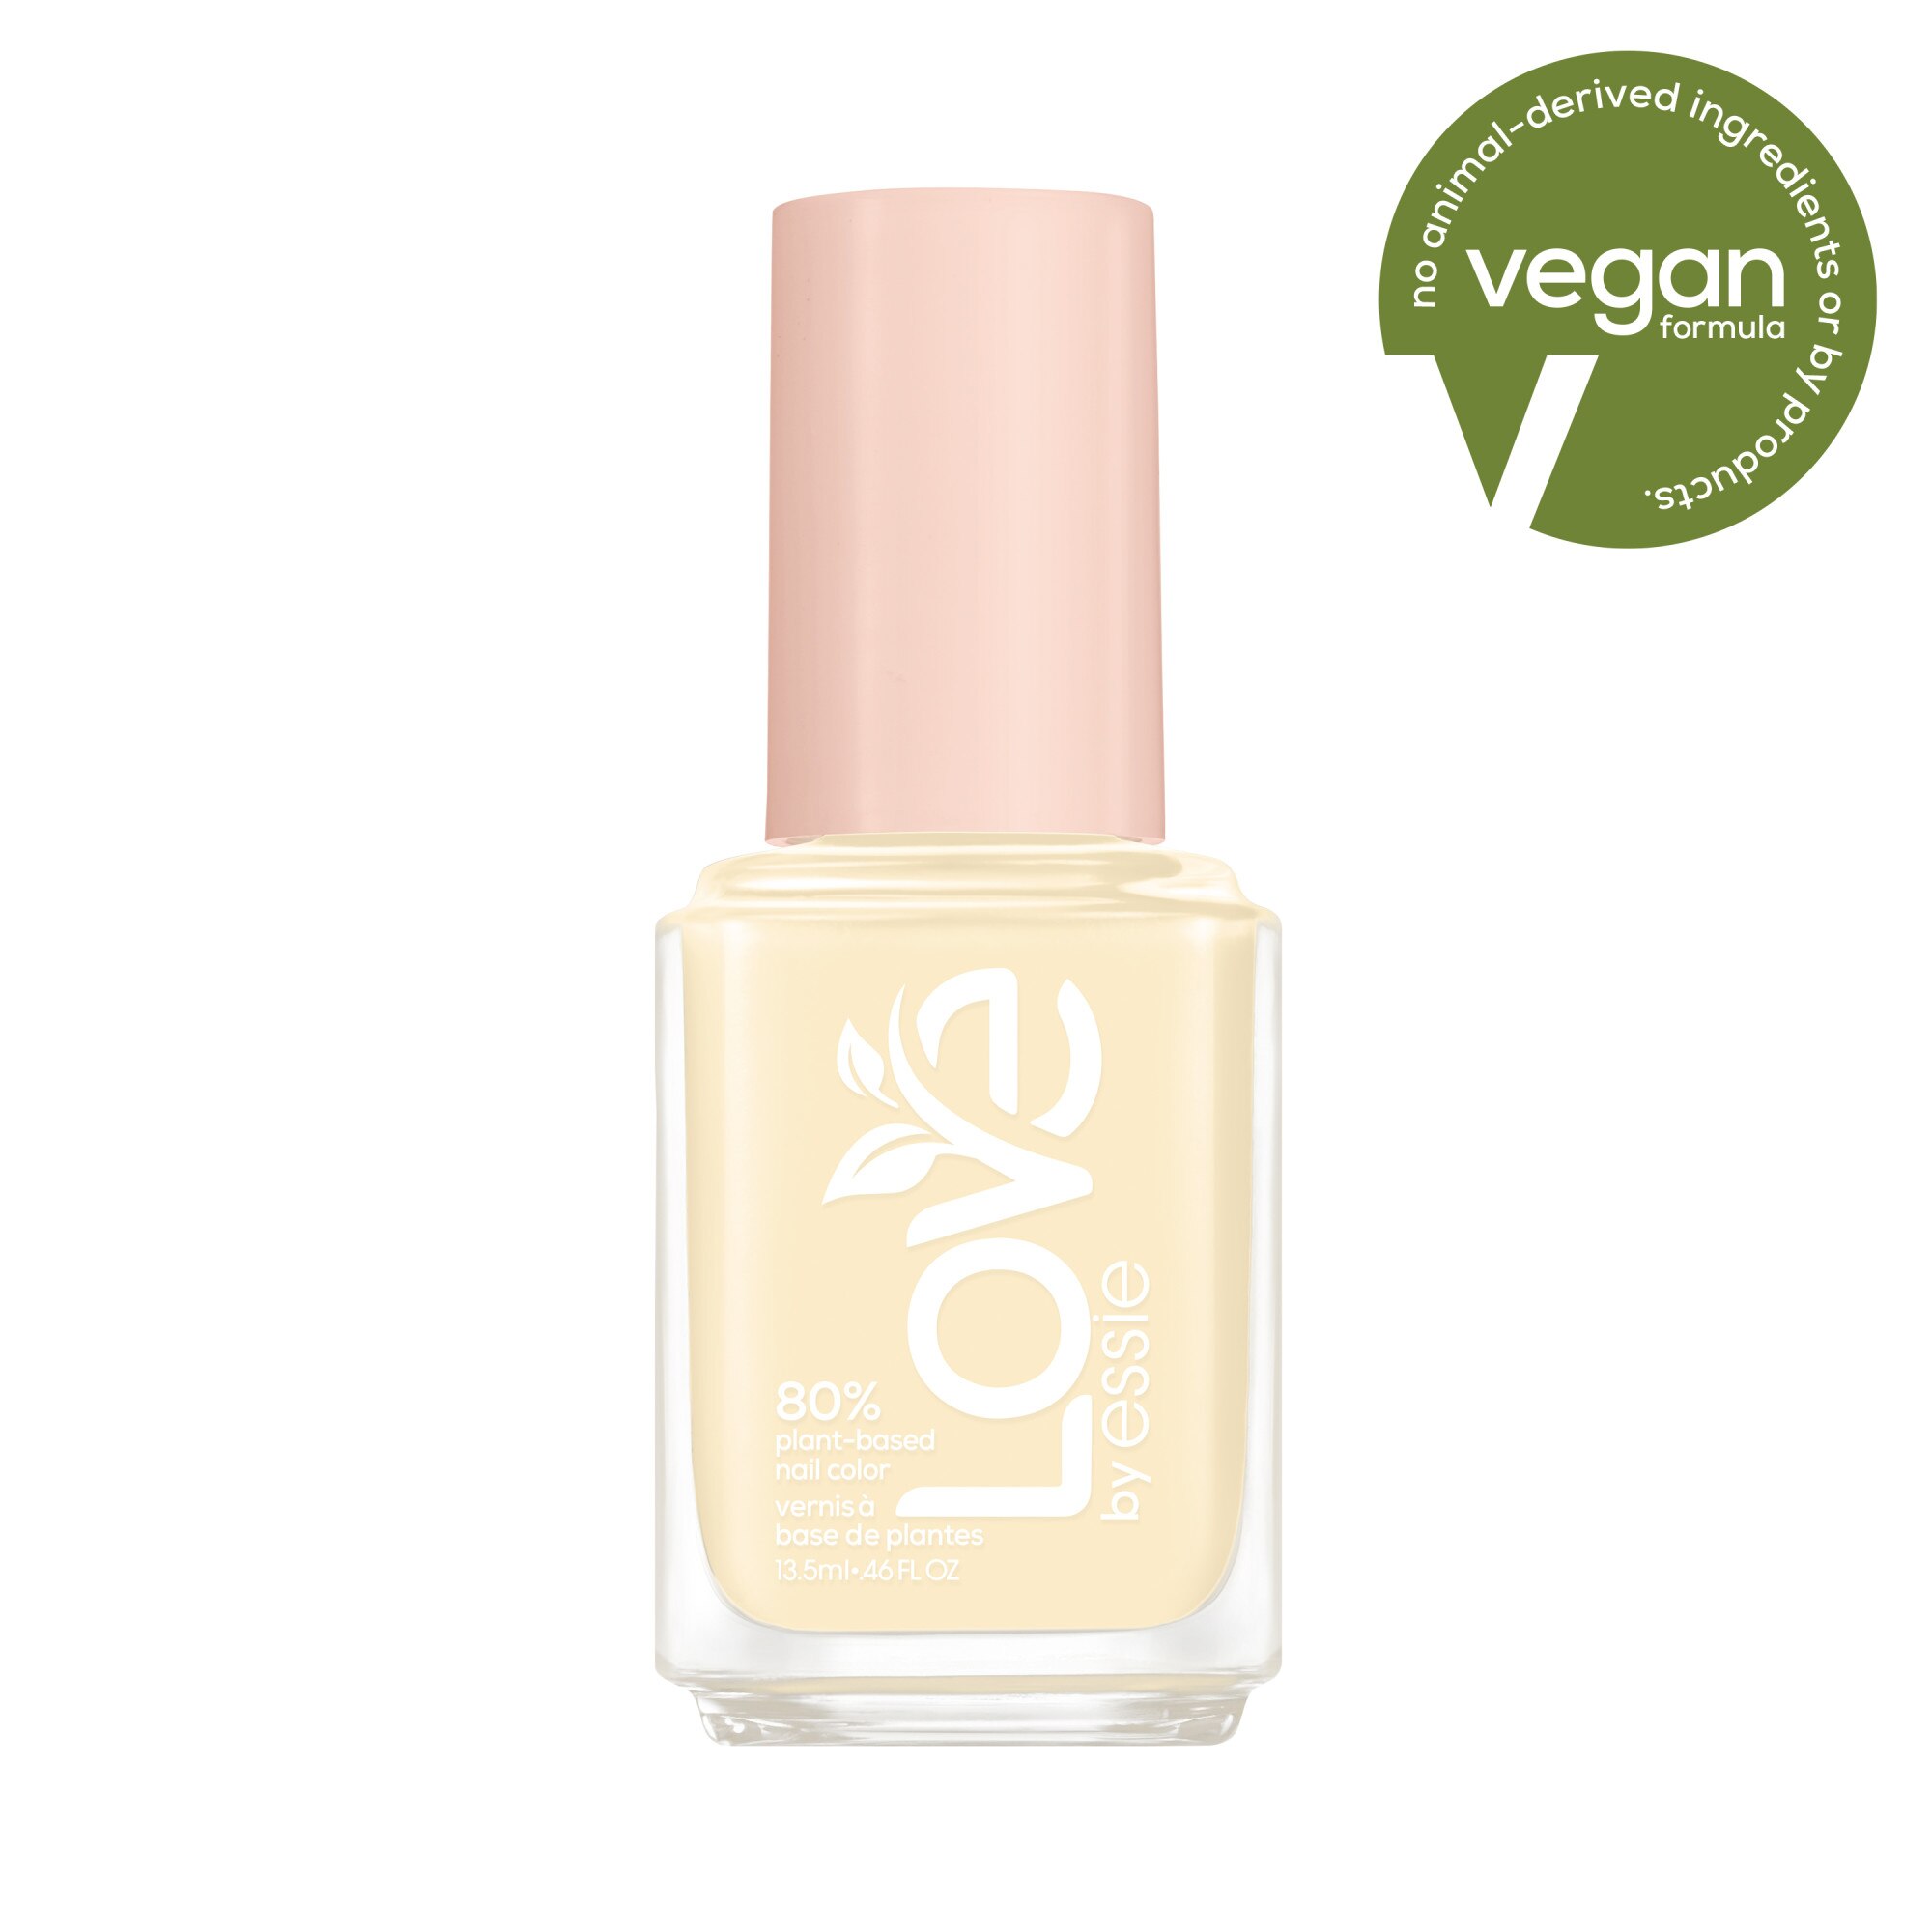 LOVE By Essie 80 Percent Plant-based Nail Polish, Vegan, Yellow, On The Brighter Side, 0.46 Fl Oz , CVS